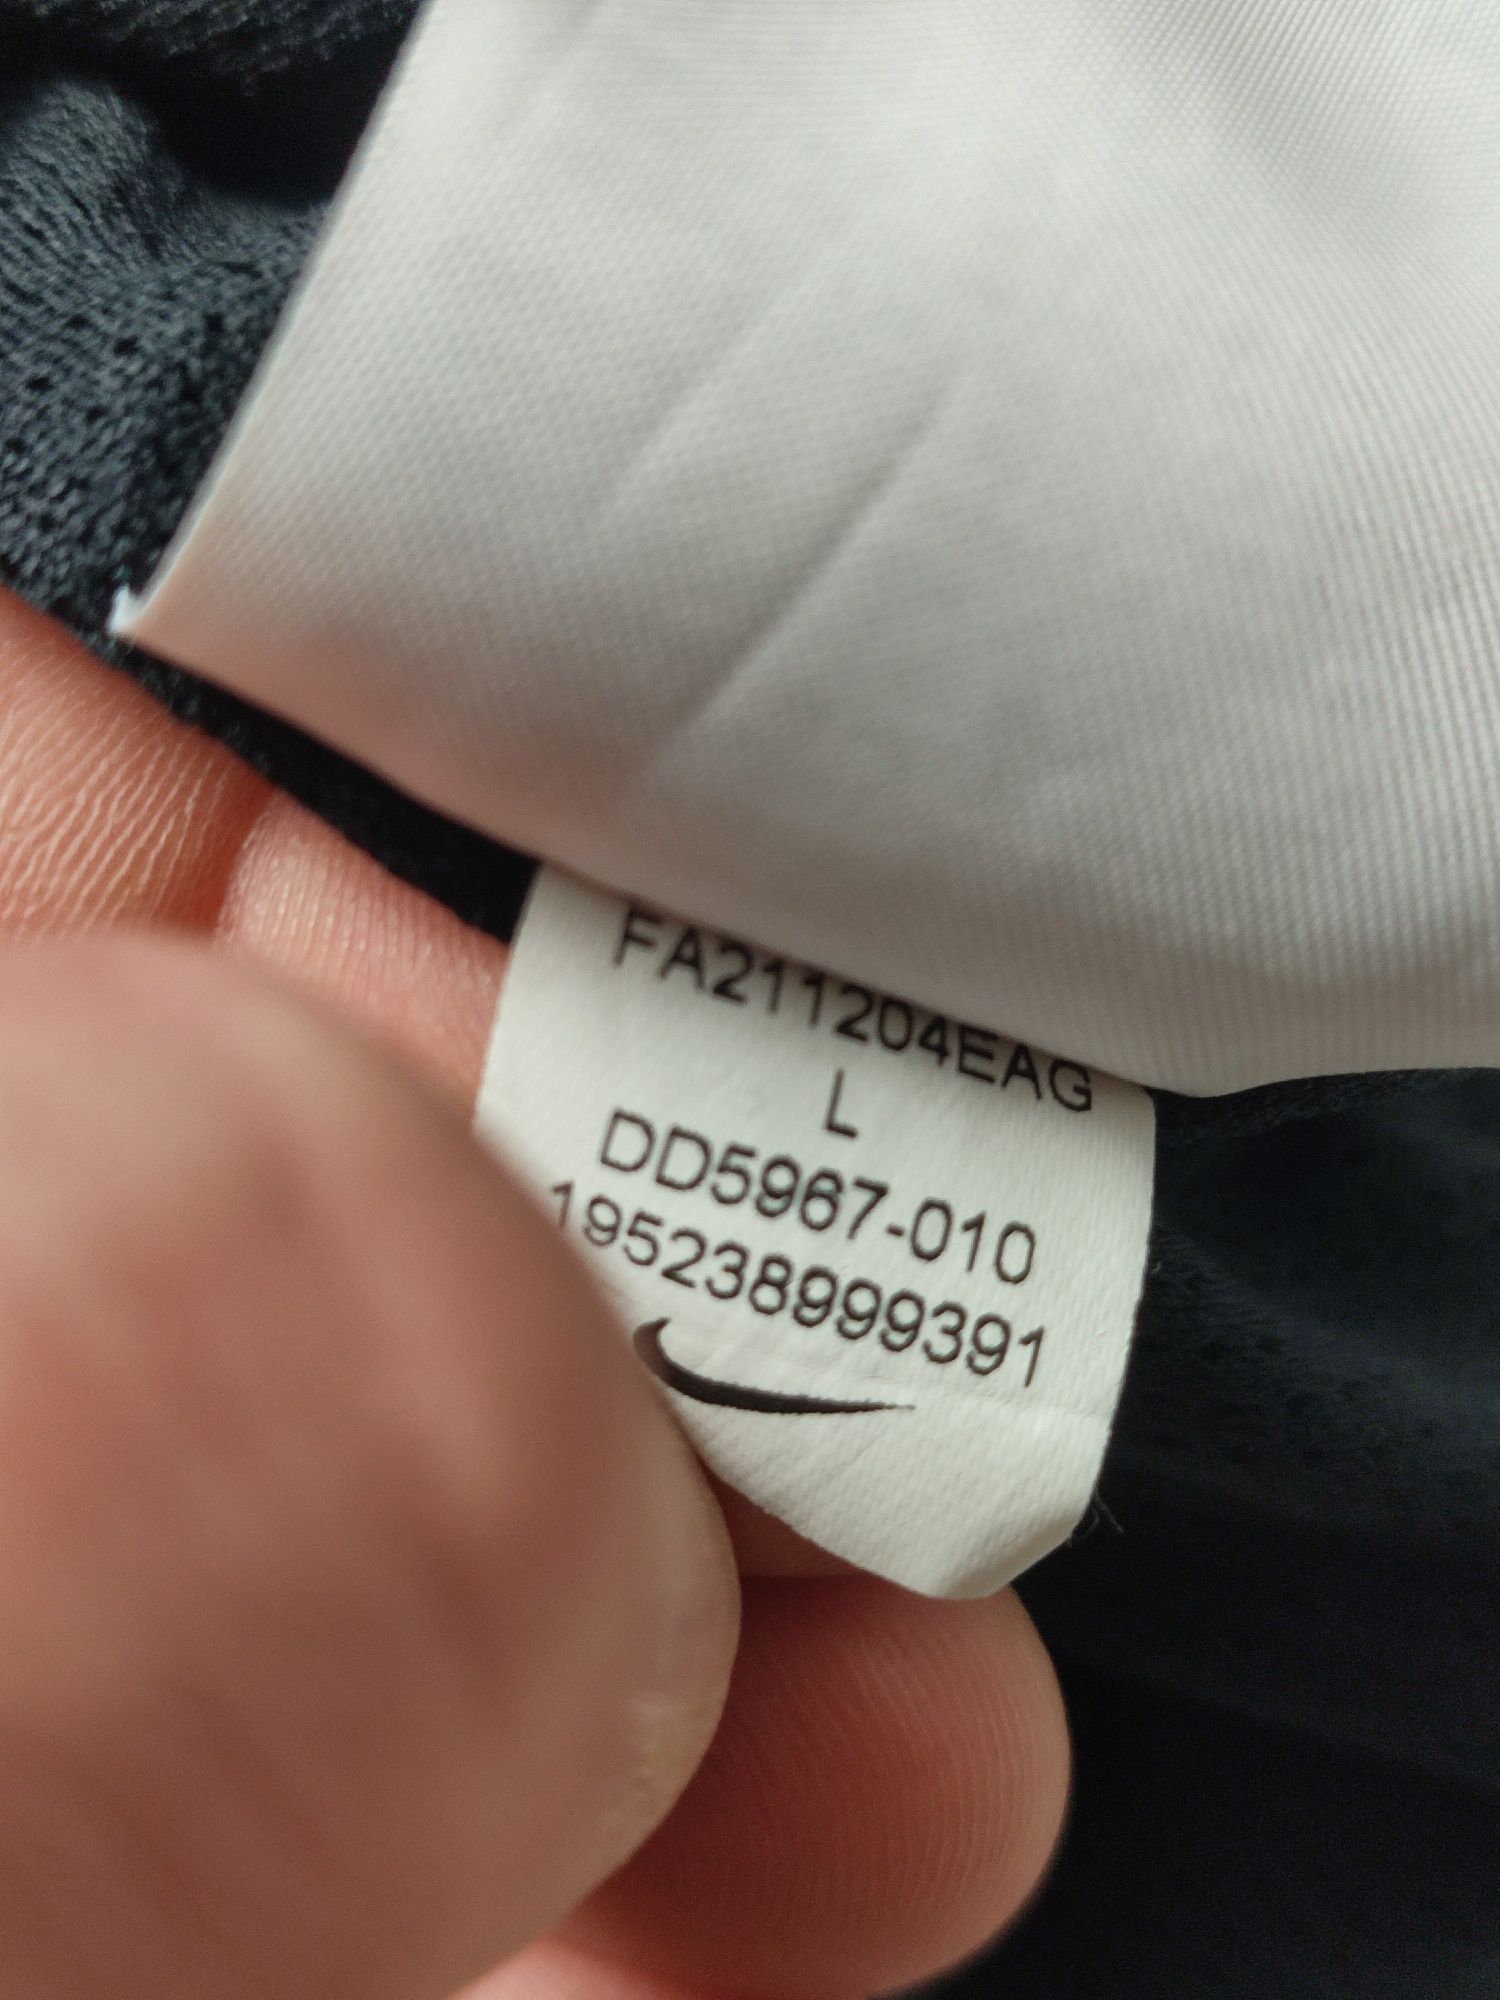 Куртка ветровка Nike Big Swoosh EUR L (р.48) бу ориг мужская нейлон